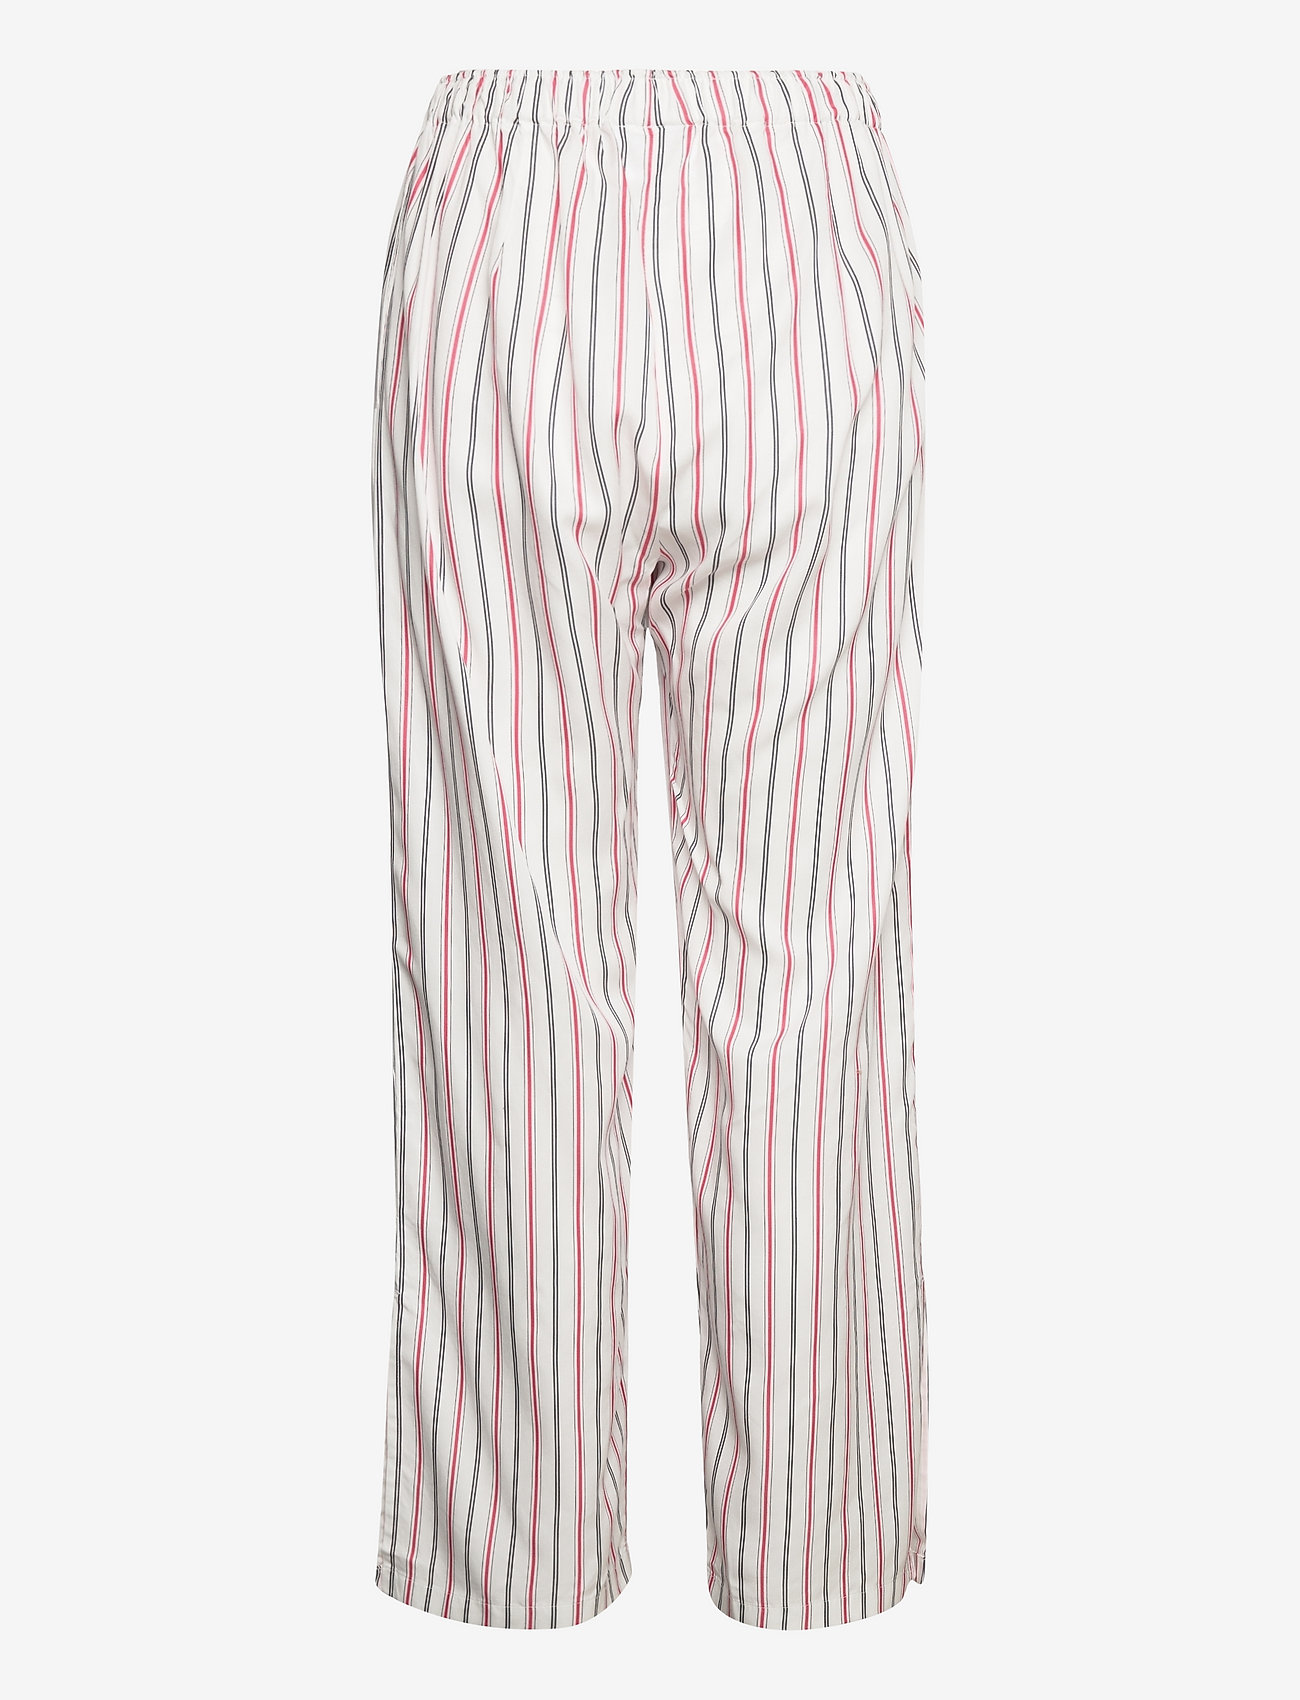 Soulland - Ciara pants - rette bukser - white/red stripes - 1